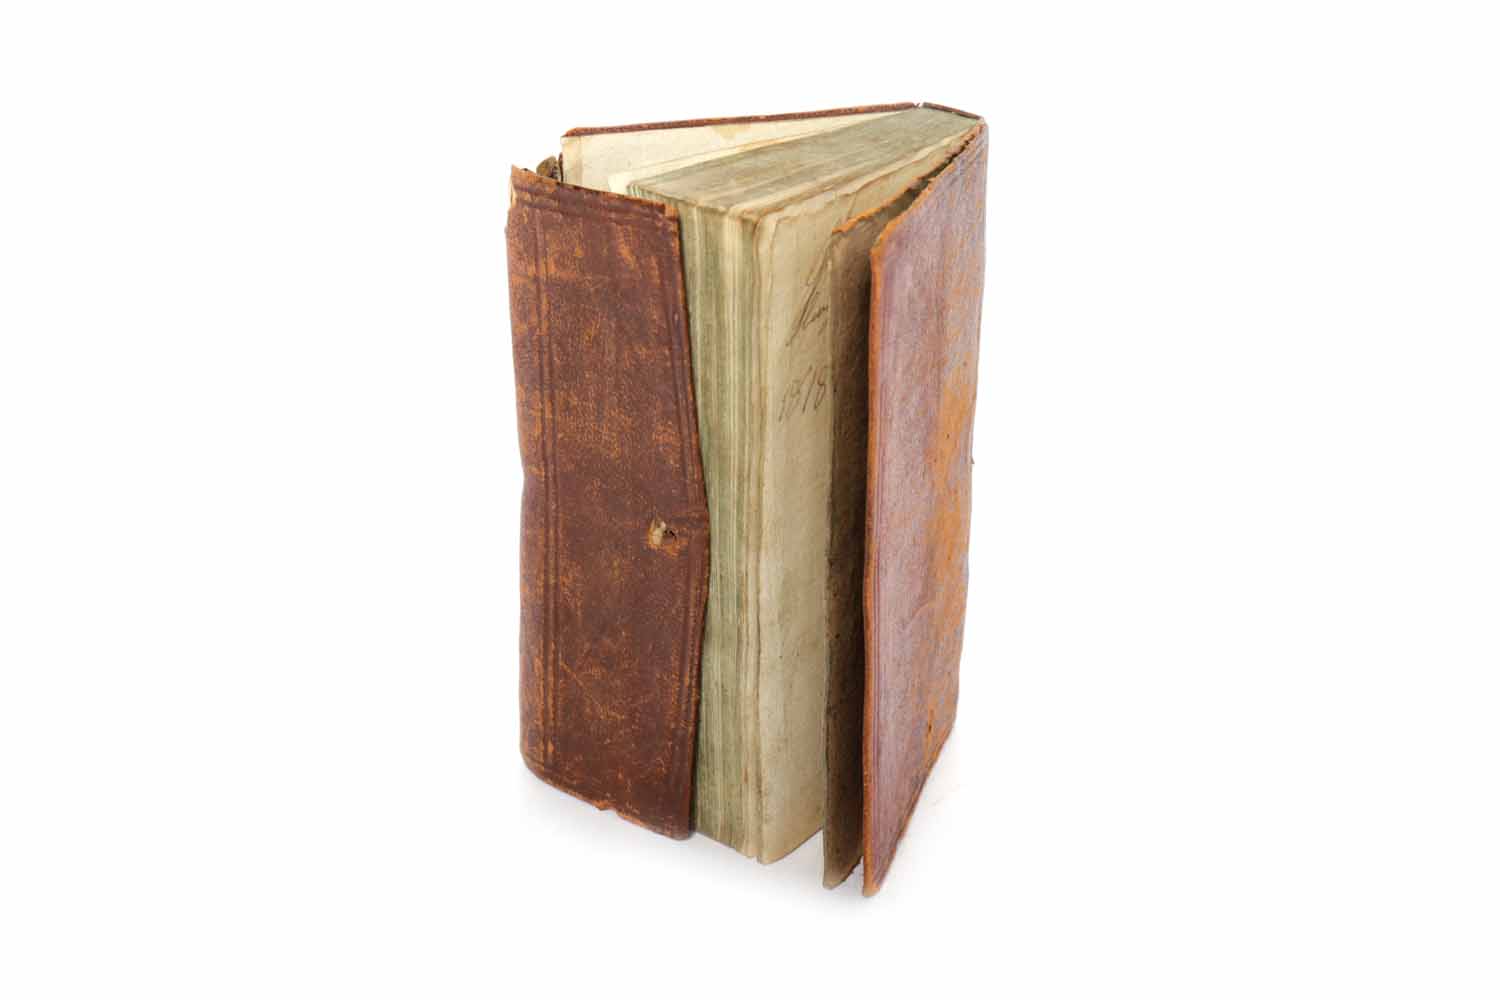 THE UNIVERSAL SCOTS ALMANACK FOR THE YEAR 1798 Edinburgh 1798, printed by Robert Allan,